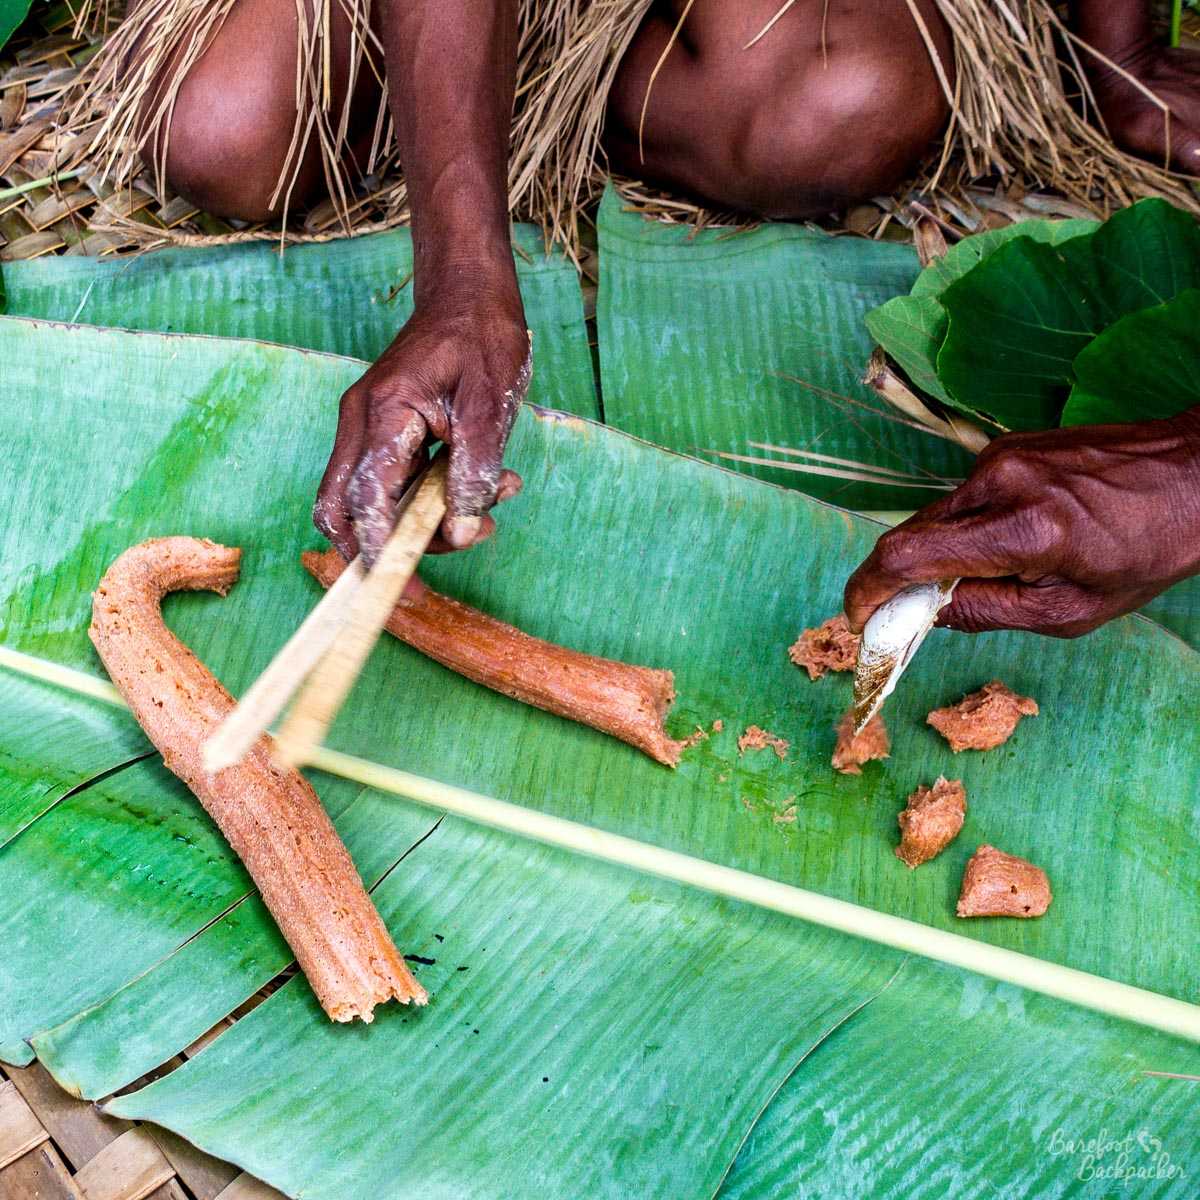 A tribeswoman making laplap.